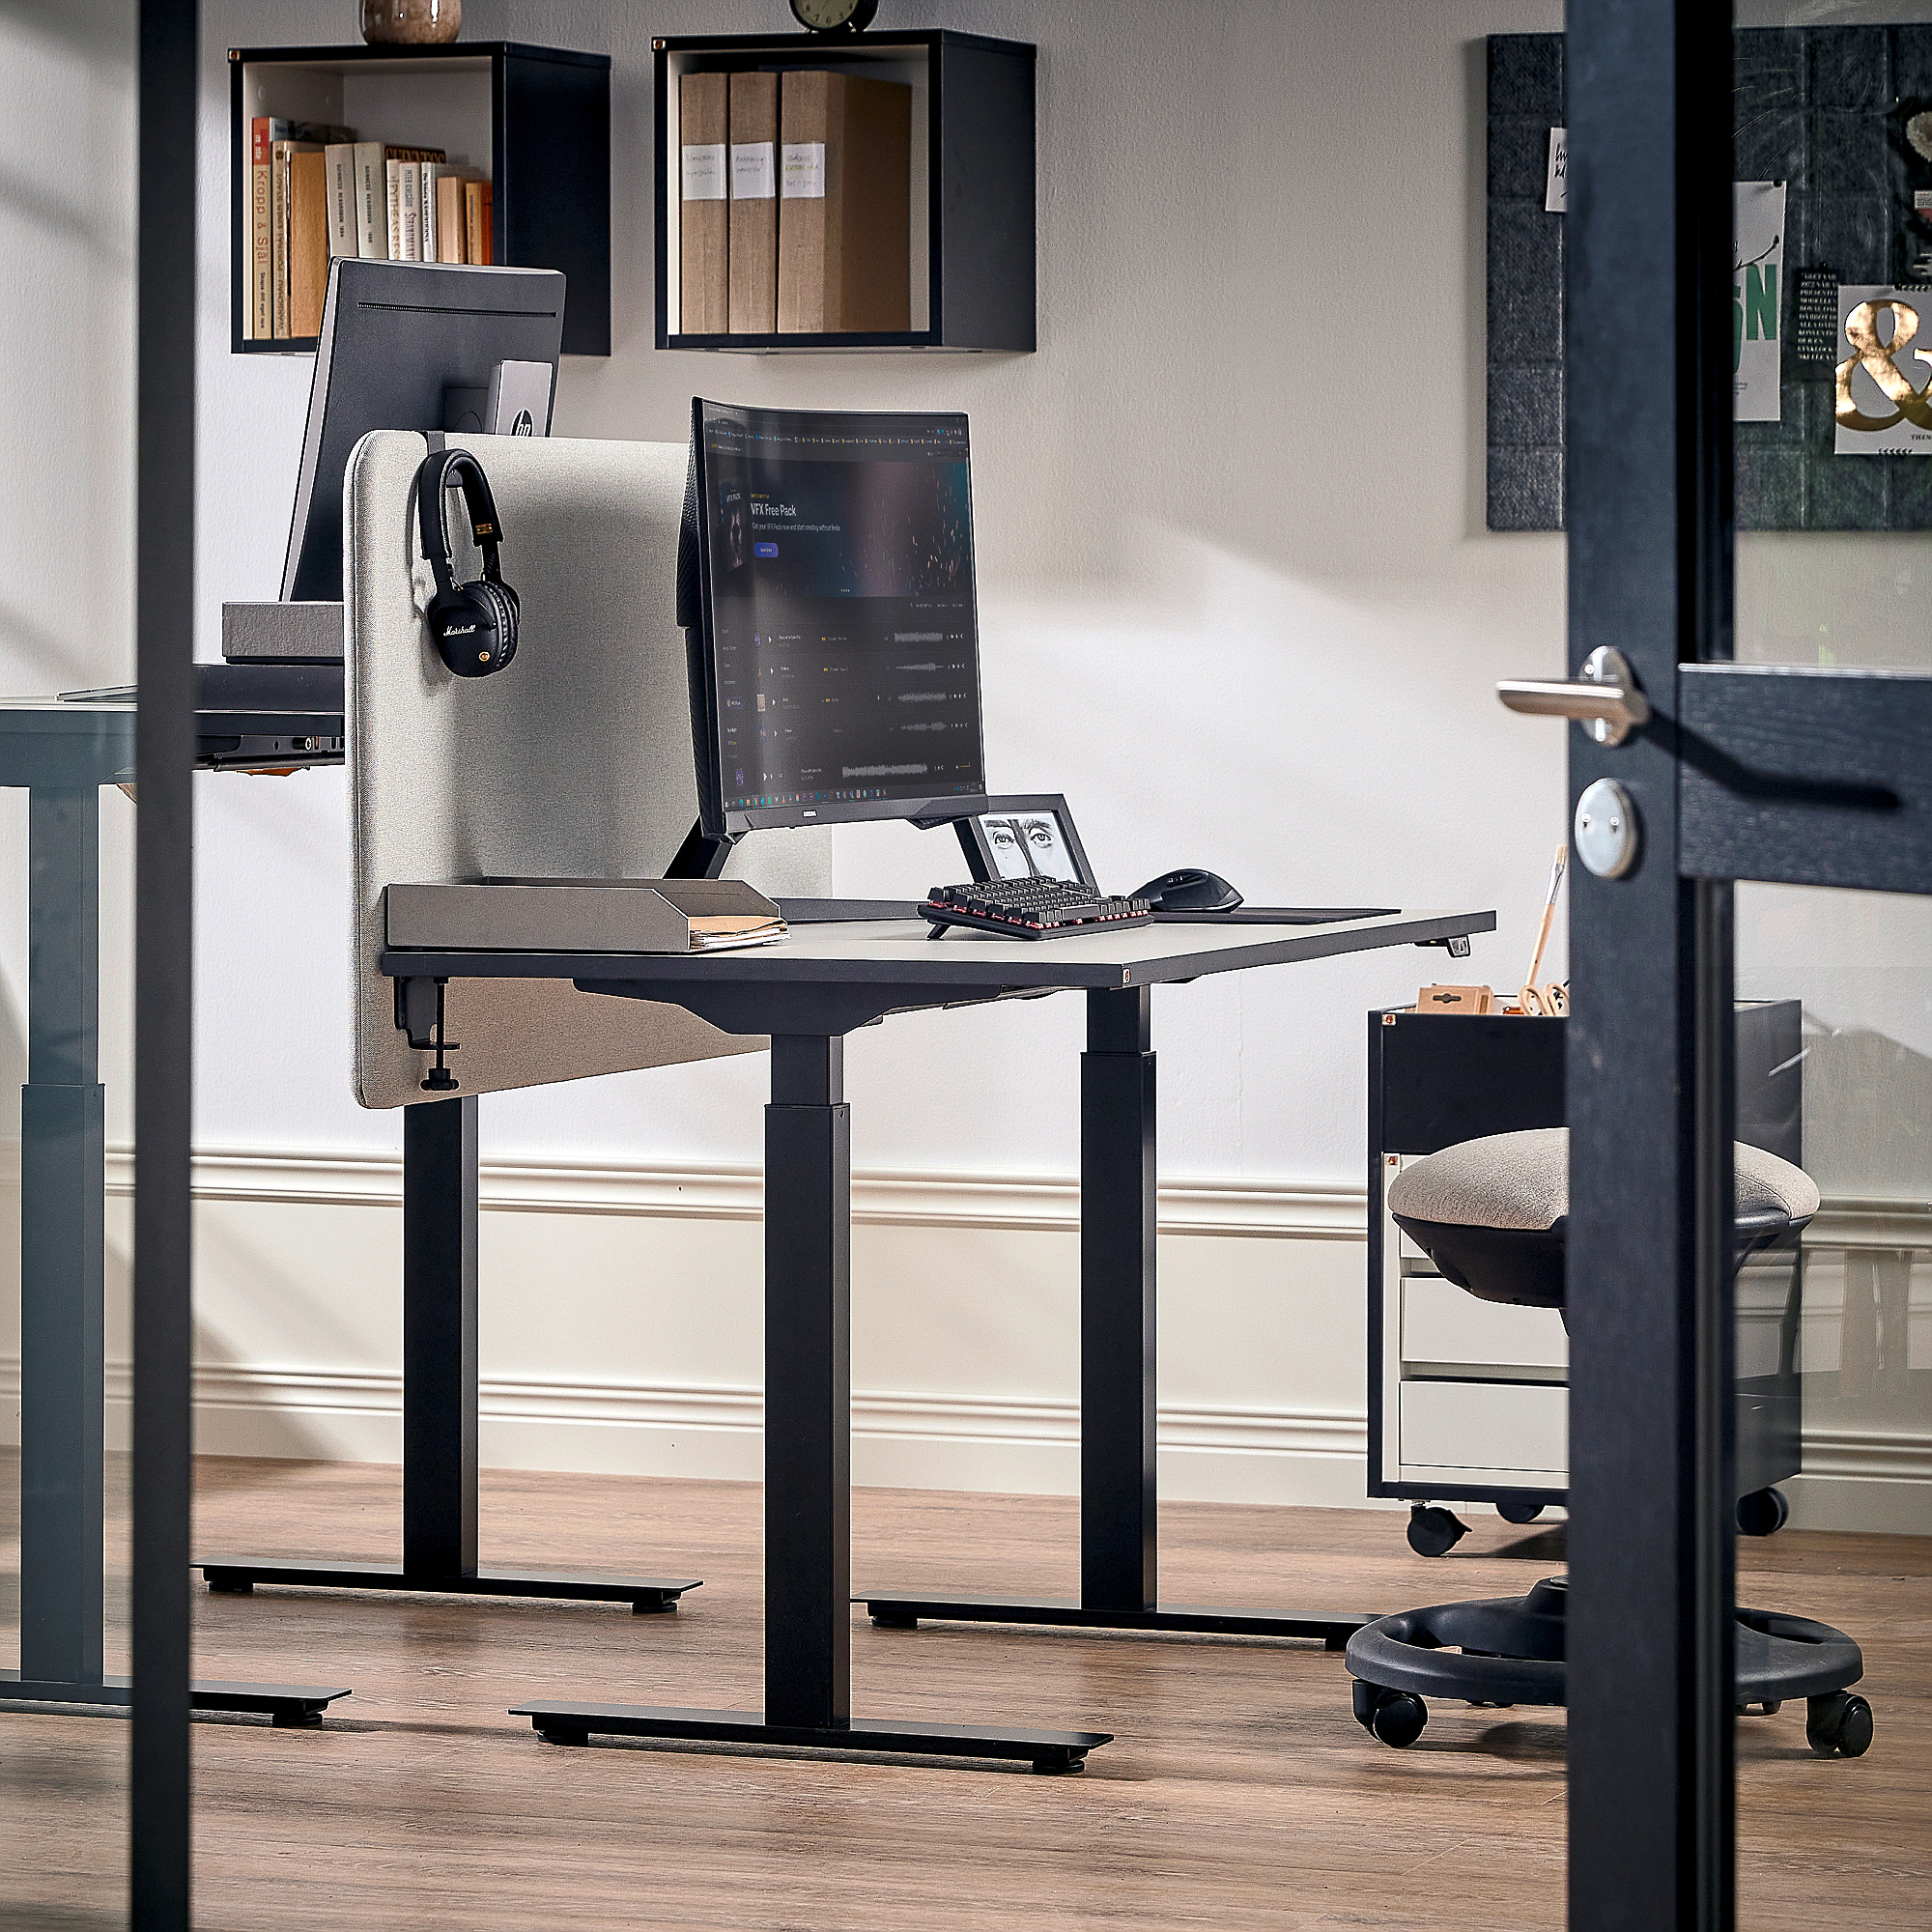 Height adjustable desk NOMAD, 1200x750 mm, white, black